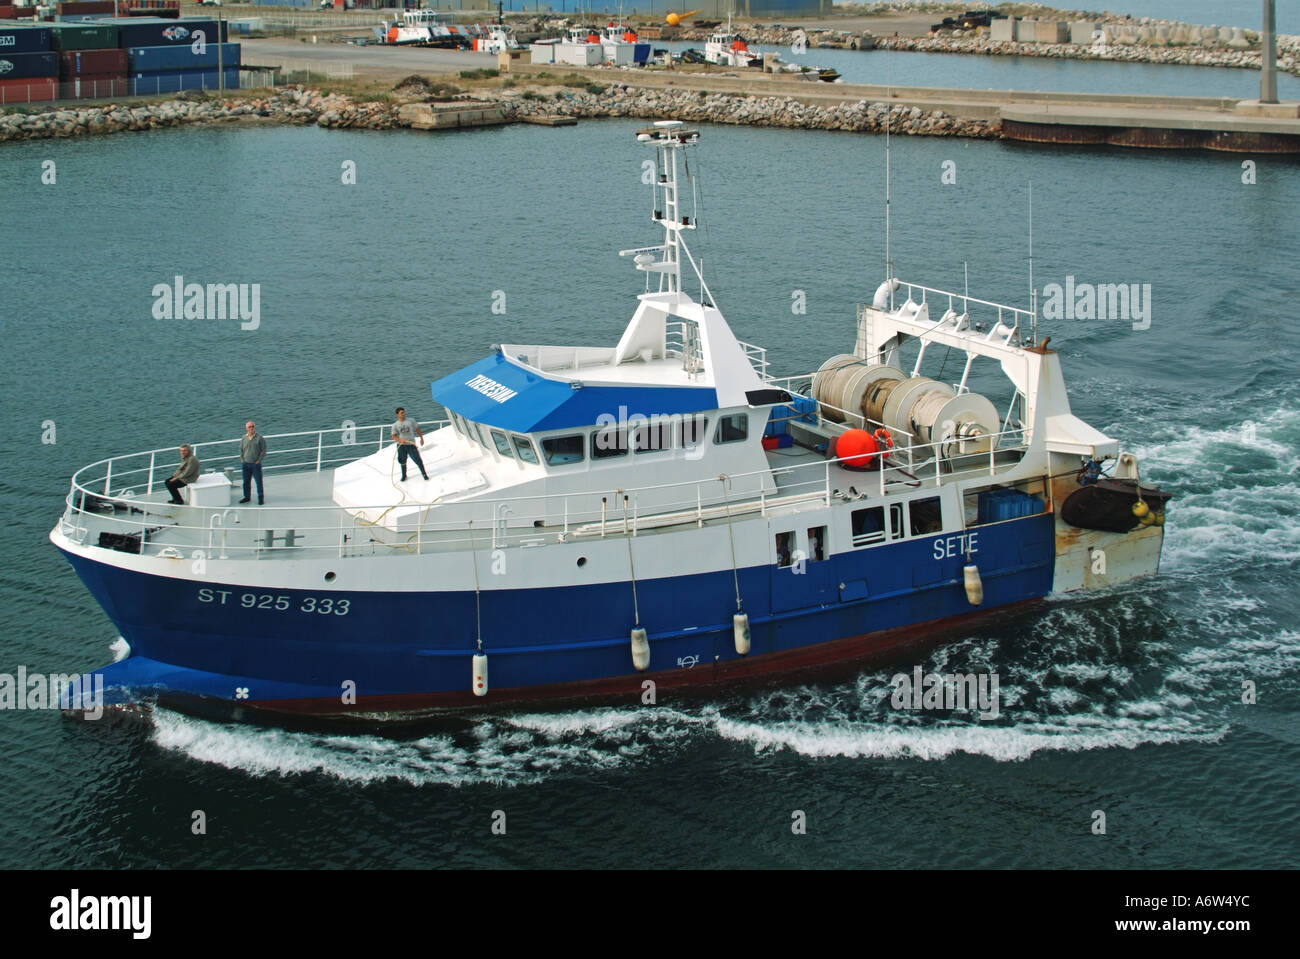 Sete port large fishing boat returning to harbour Stock Photo - Alamy